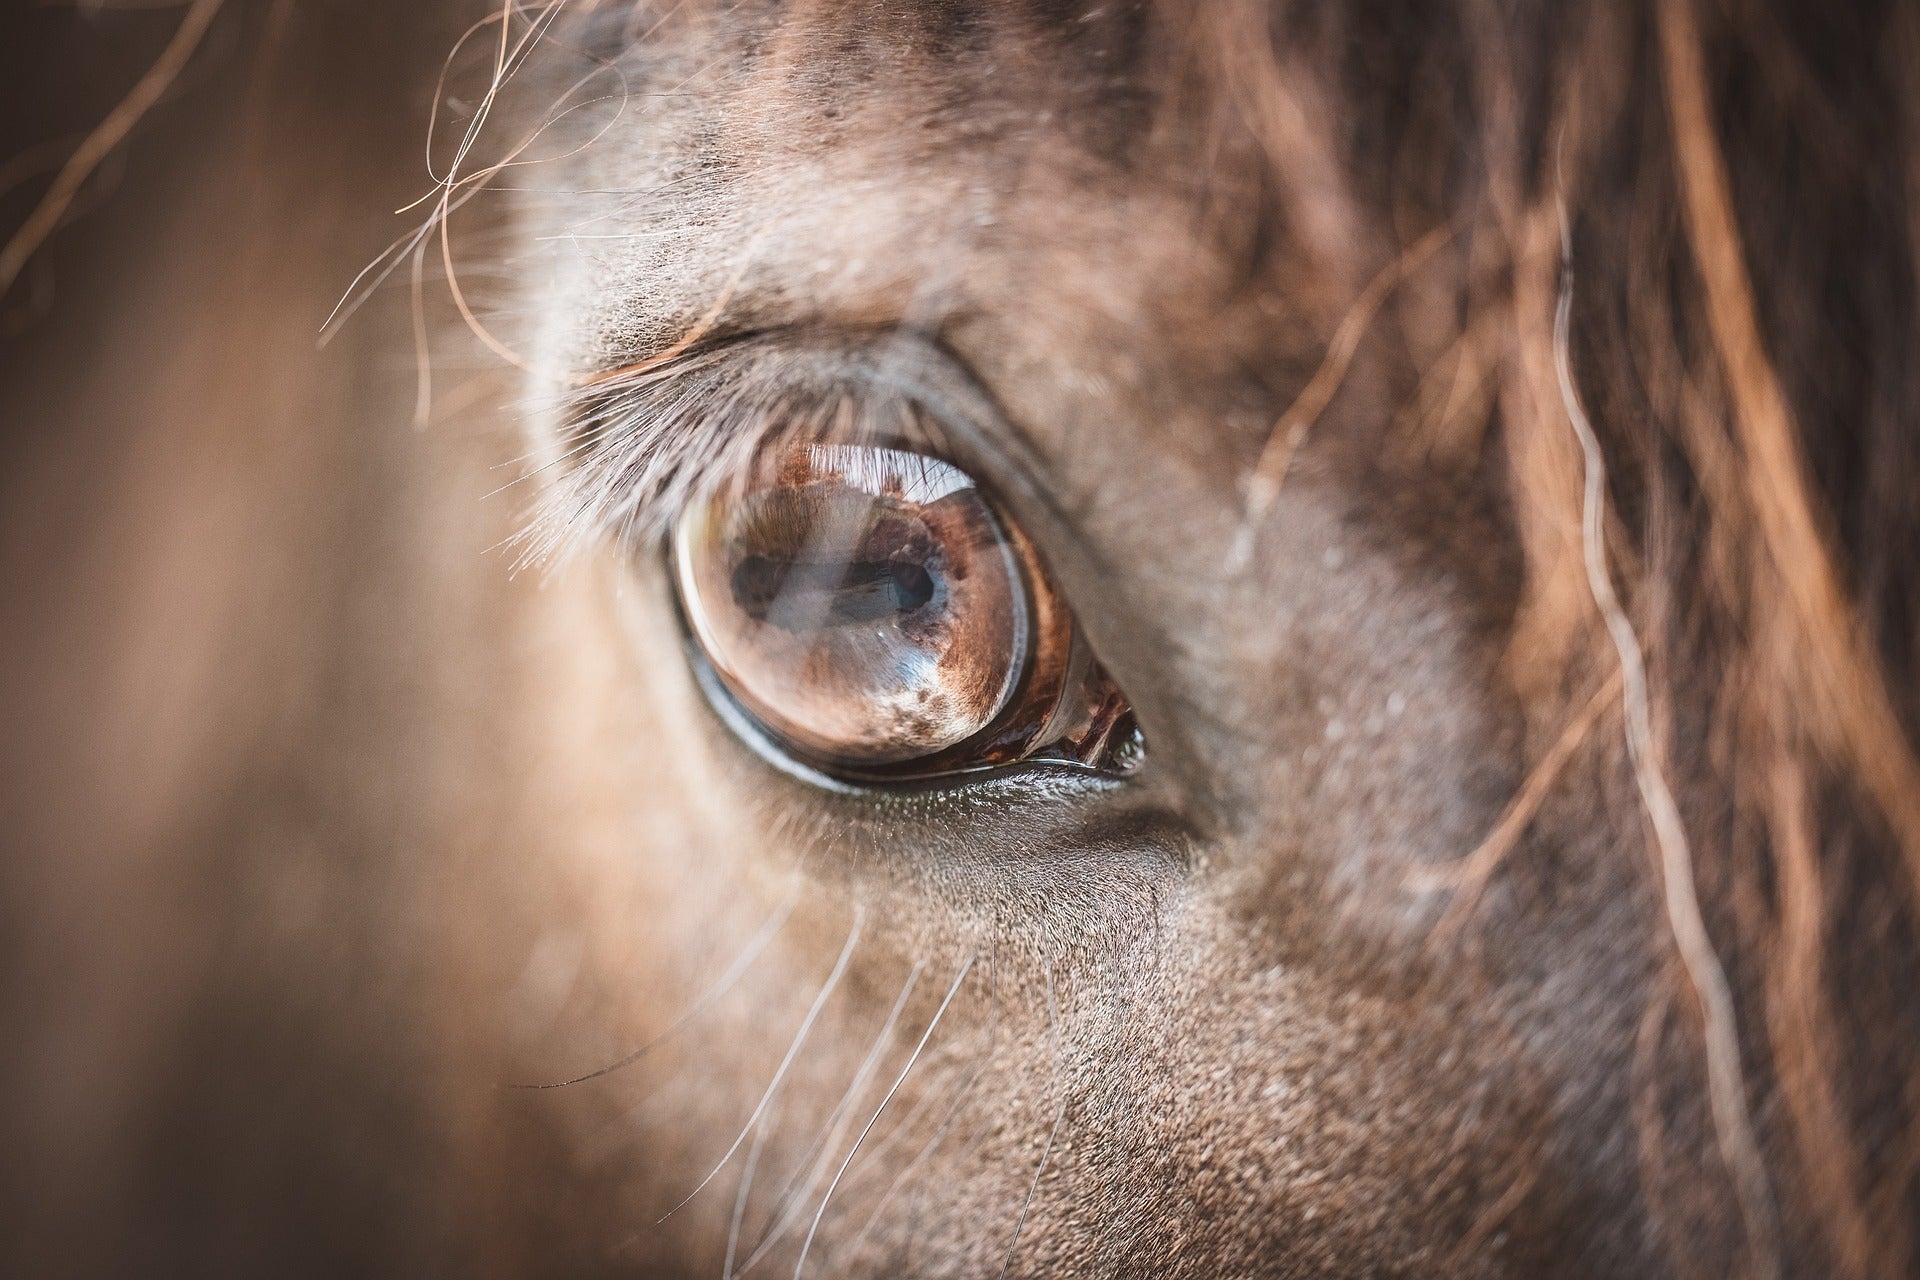 Leucillin Antiseptic Skin Care for Dogs, Horses & Pets